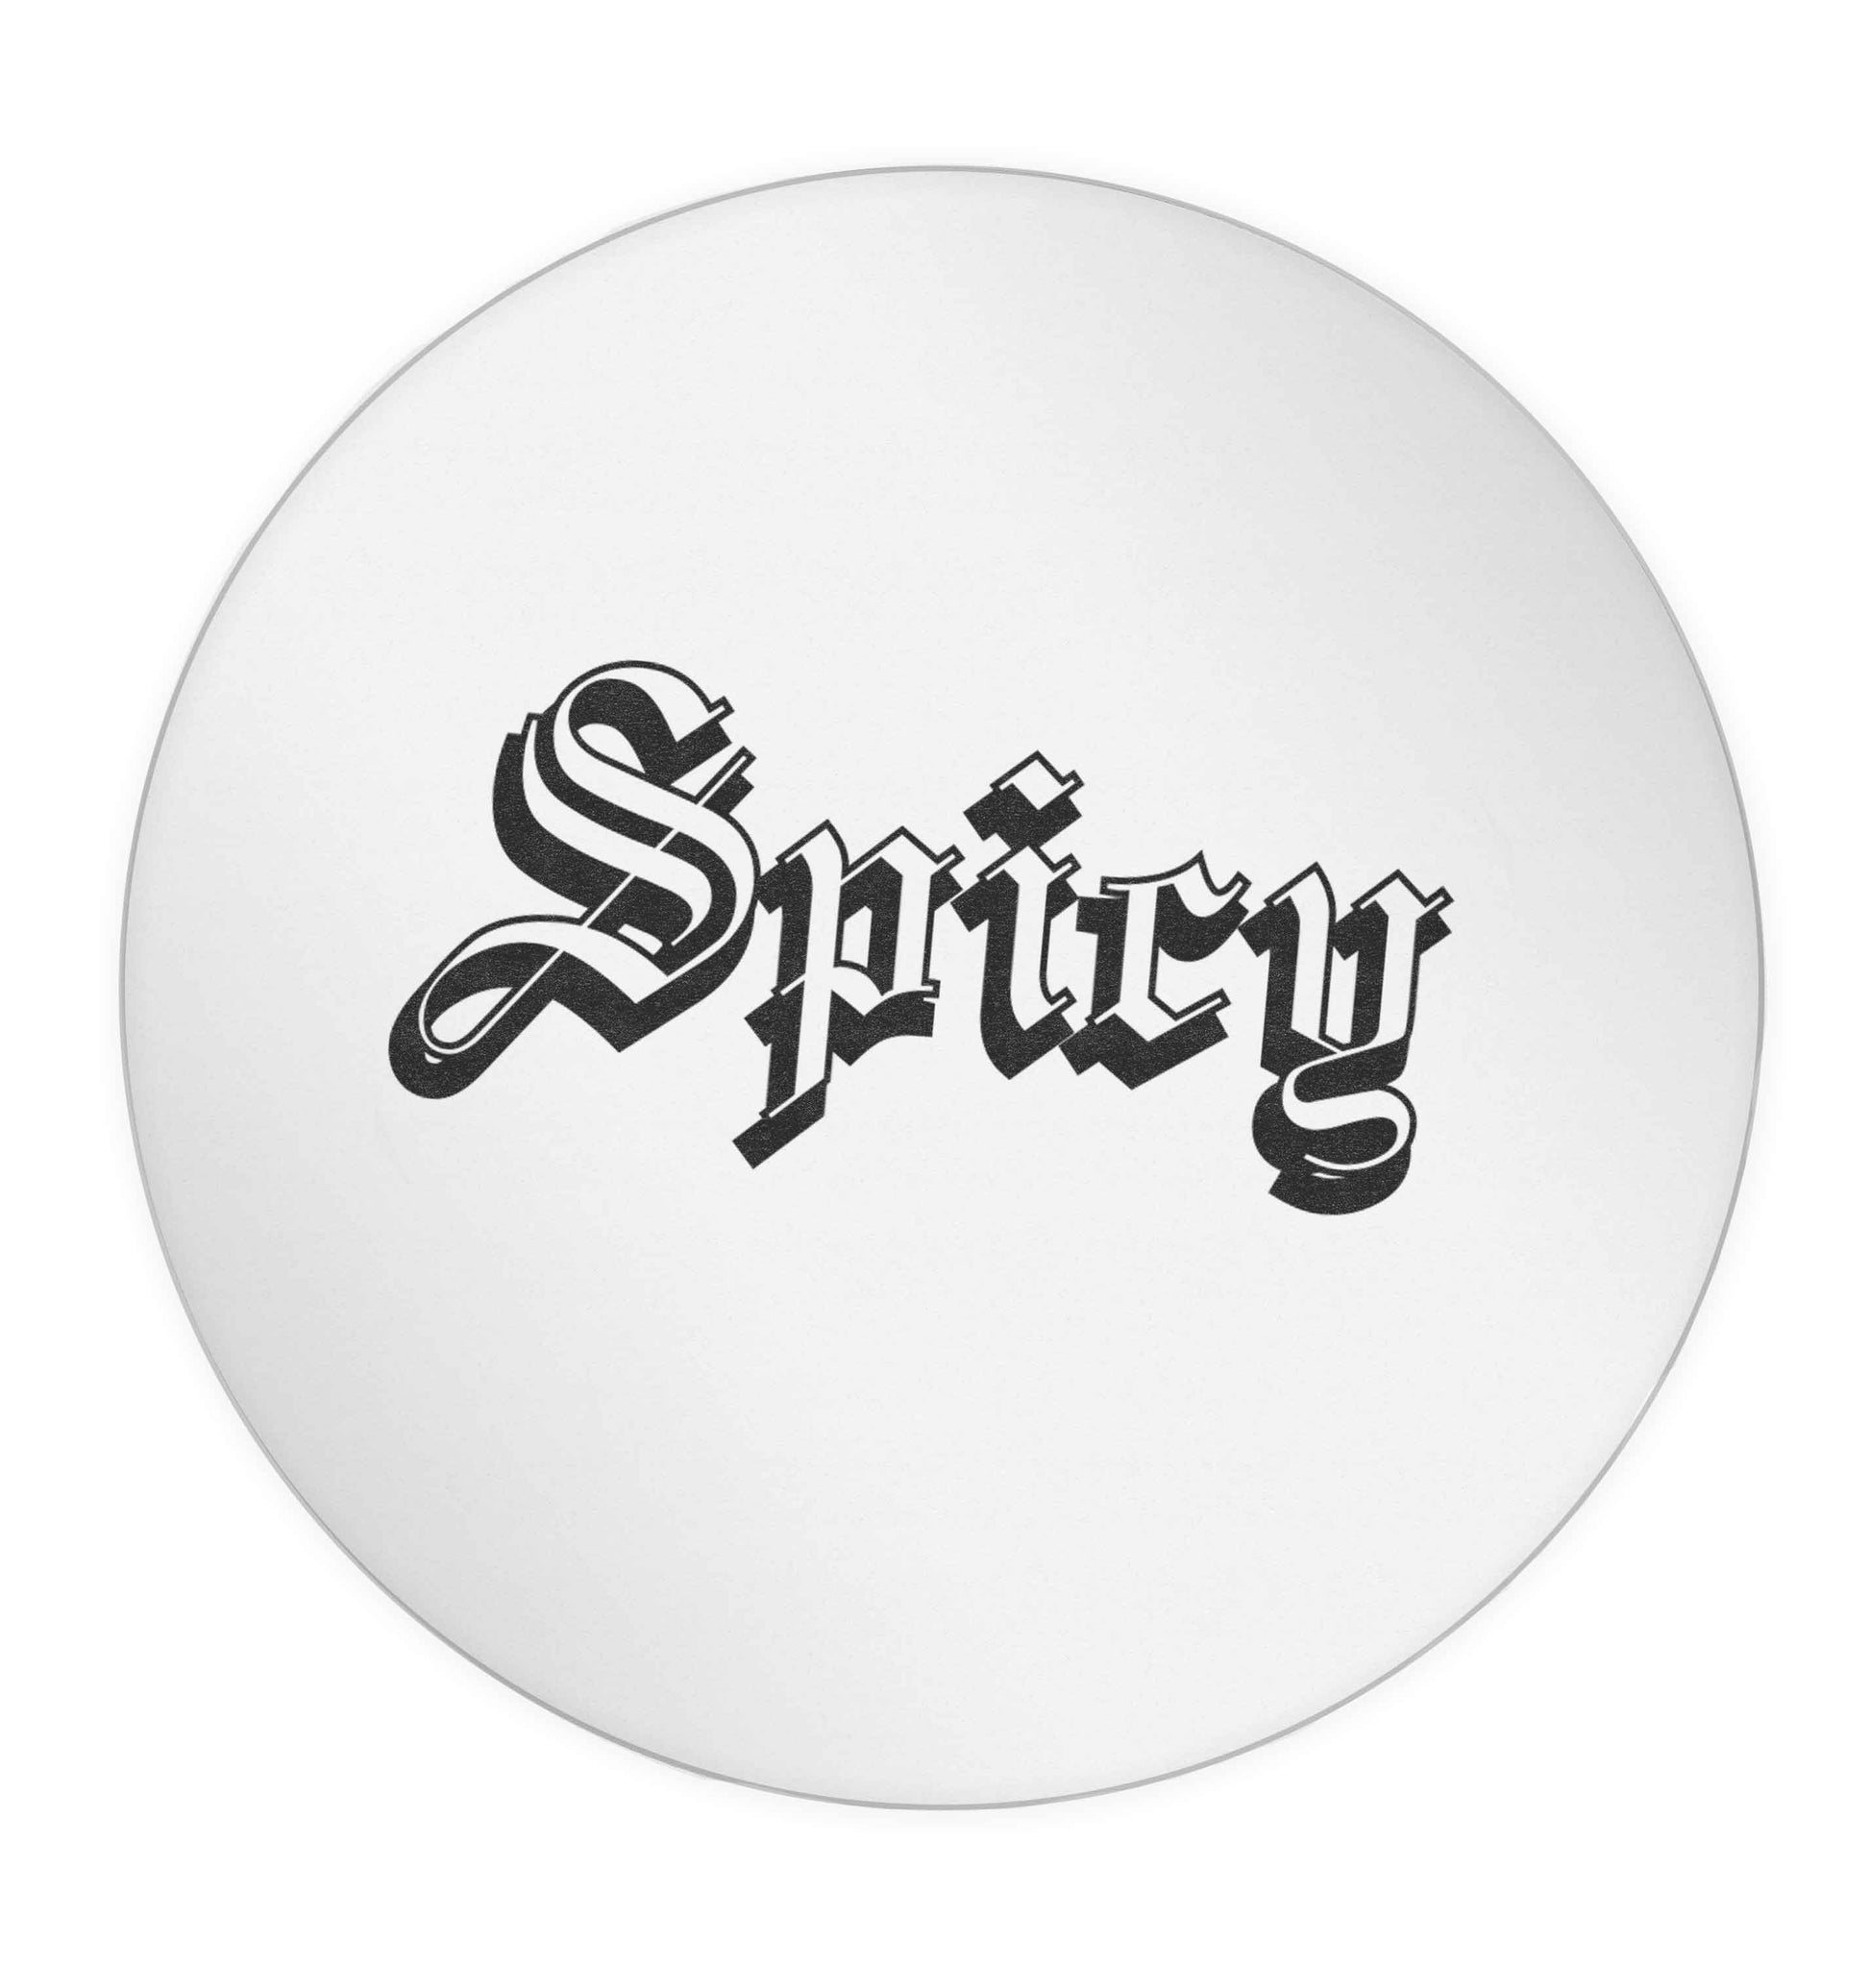 Spicy 24 @ 45mm matt circle stickers